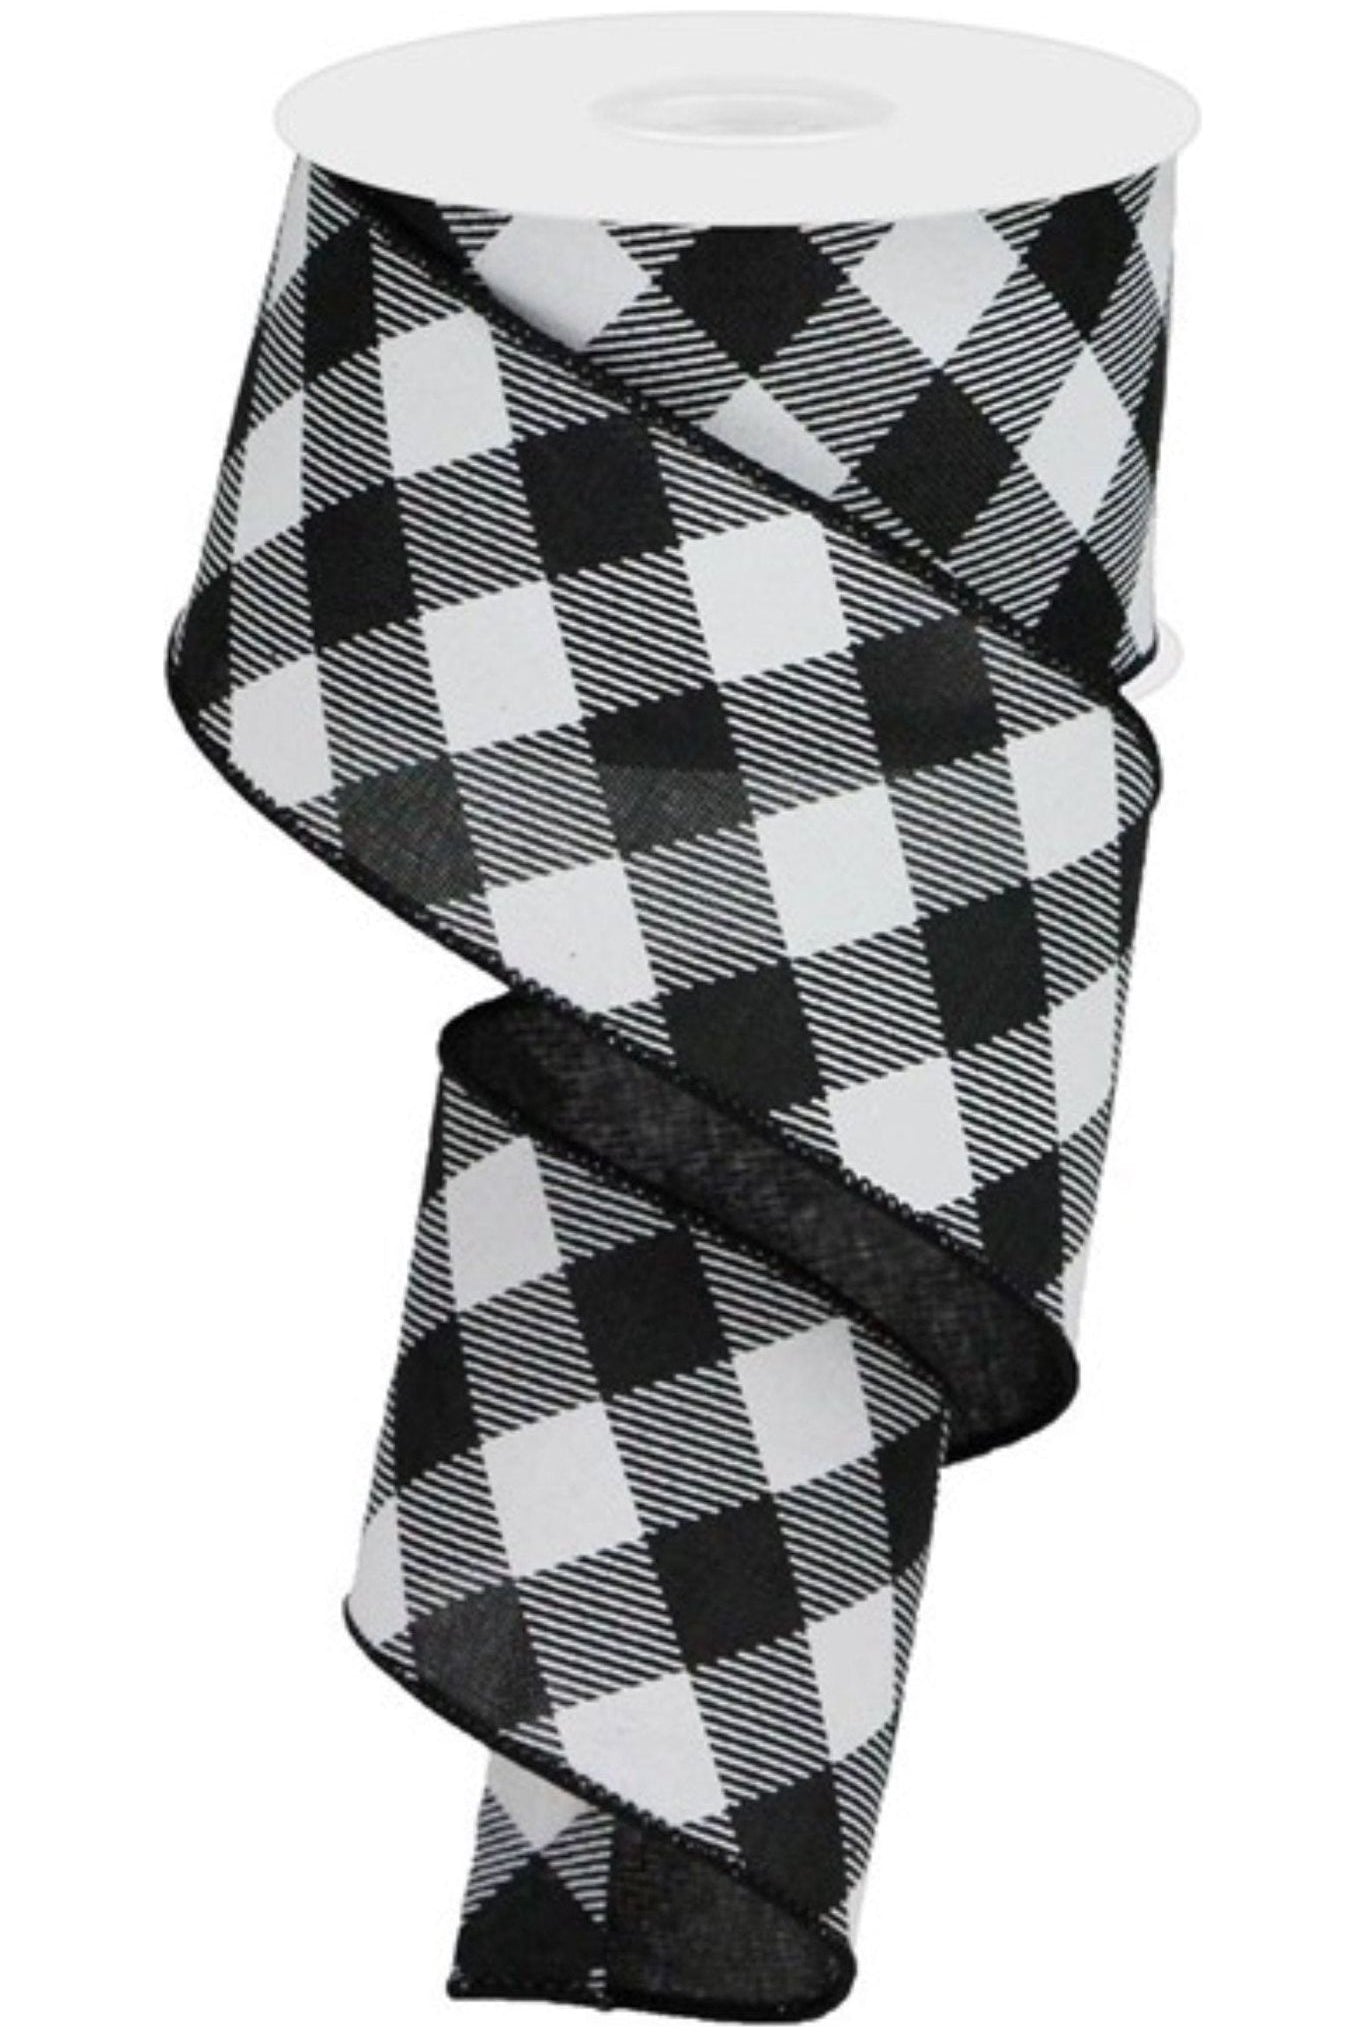 Shop For 2.5" Diagonal Check On Royal Ribbon: Black & White (10 Yards) RGA126502